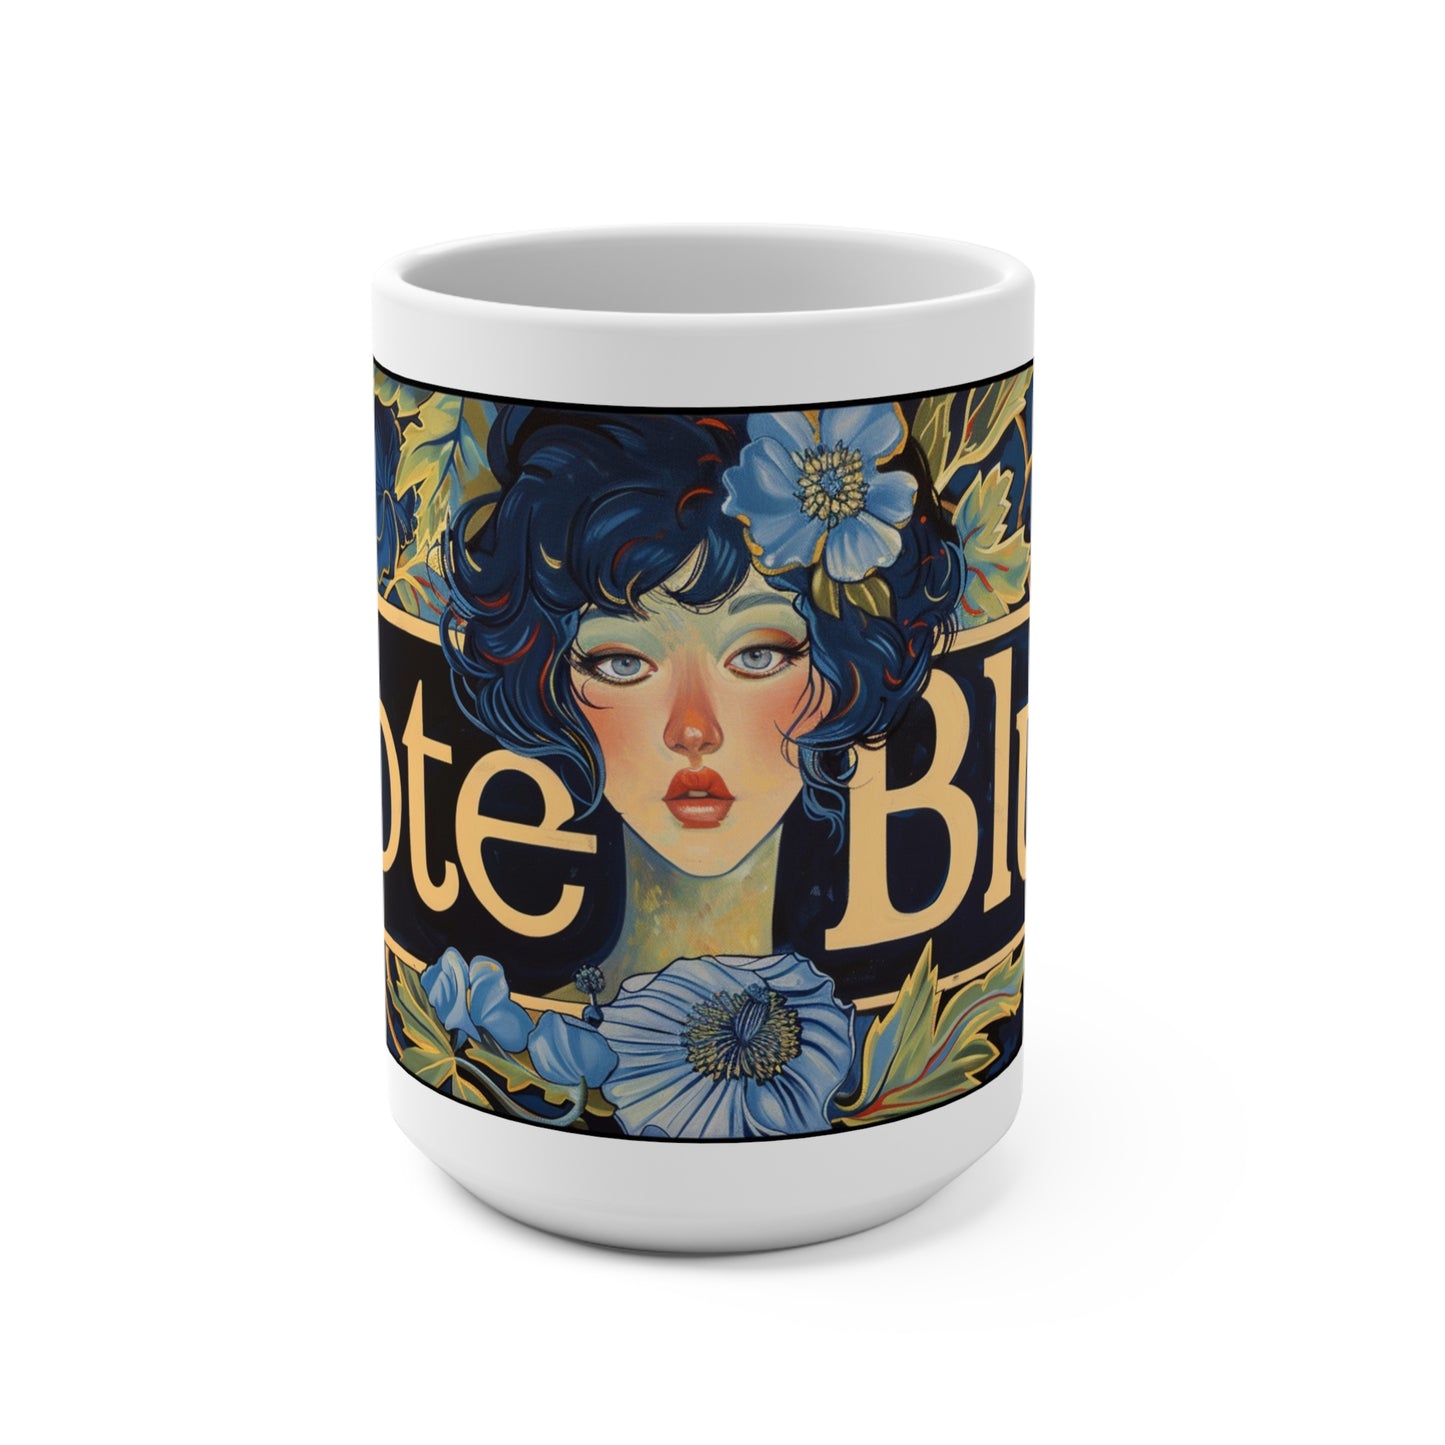 Vote Blue Mug (15oz) Political Activist Coffee Tea Mug | Beauty with a Purpose